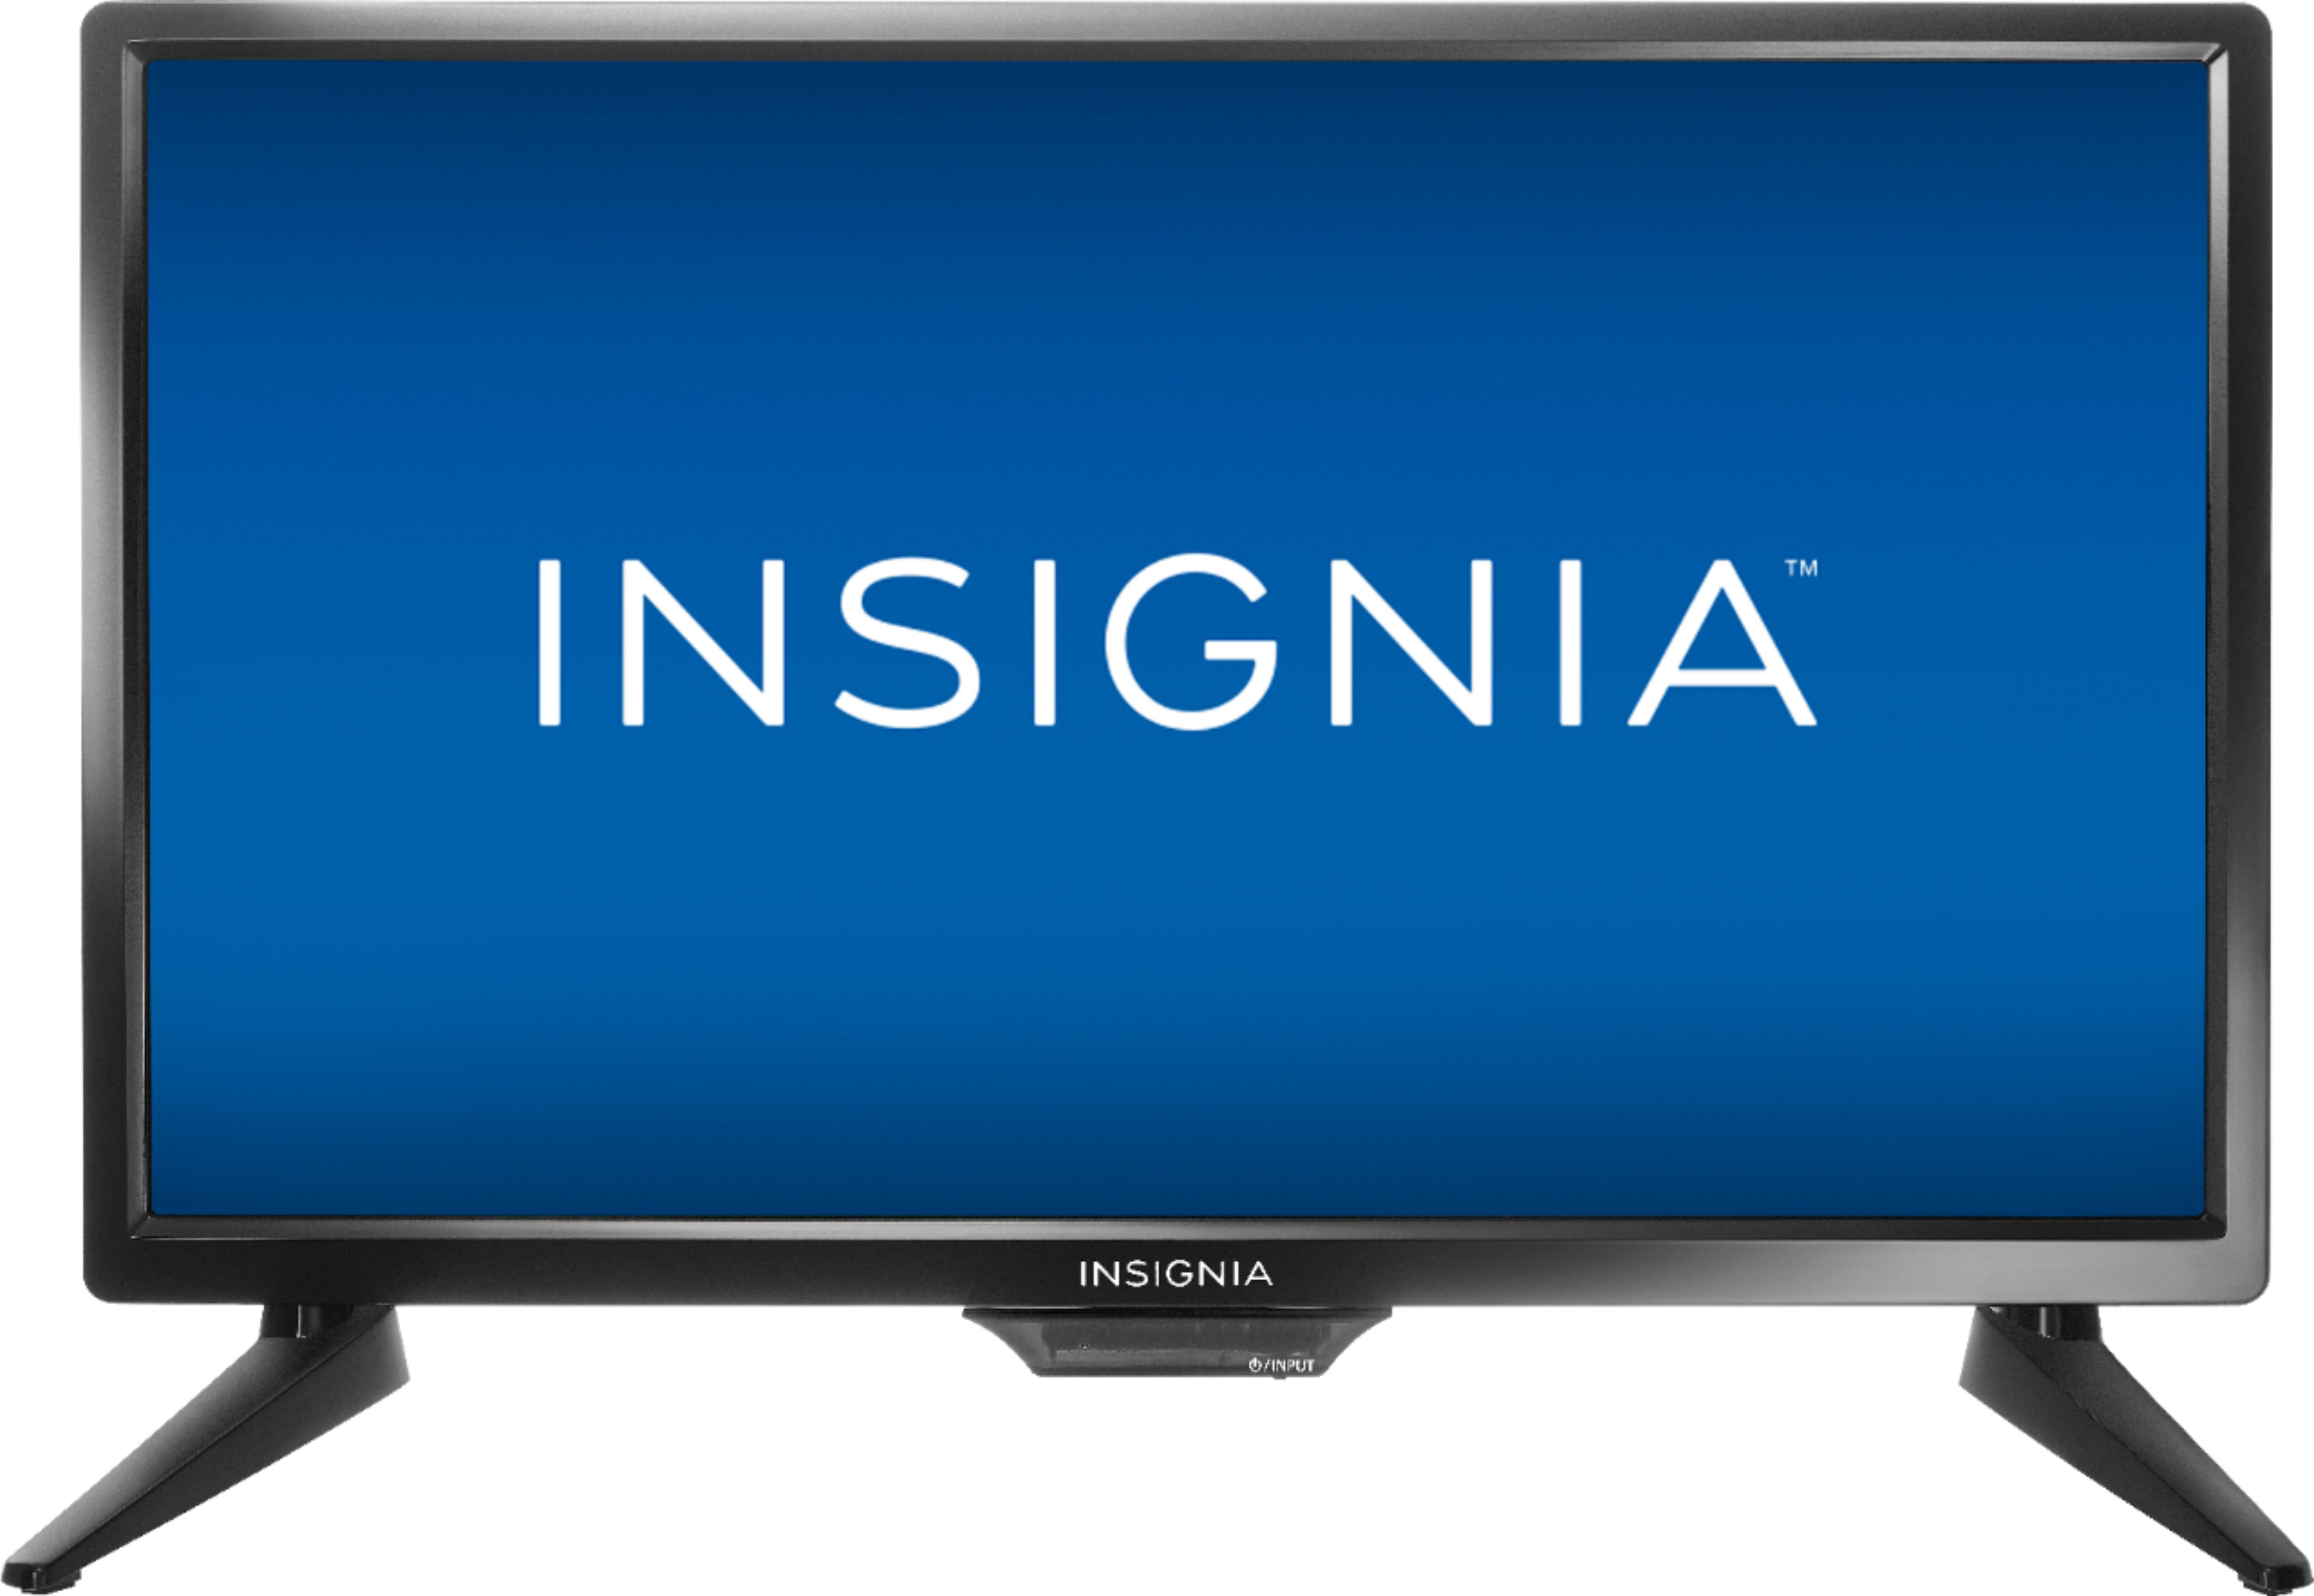 Insignia™ - 19" Class - LED - 720p - HDTV